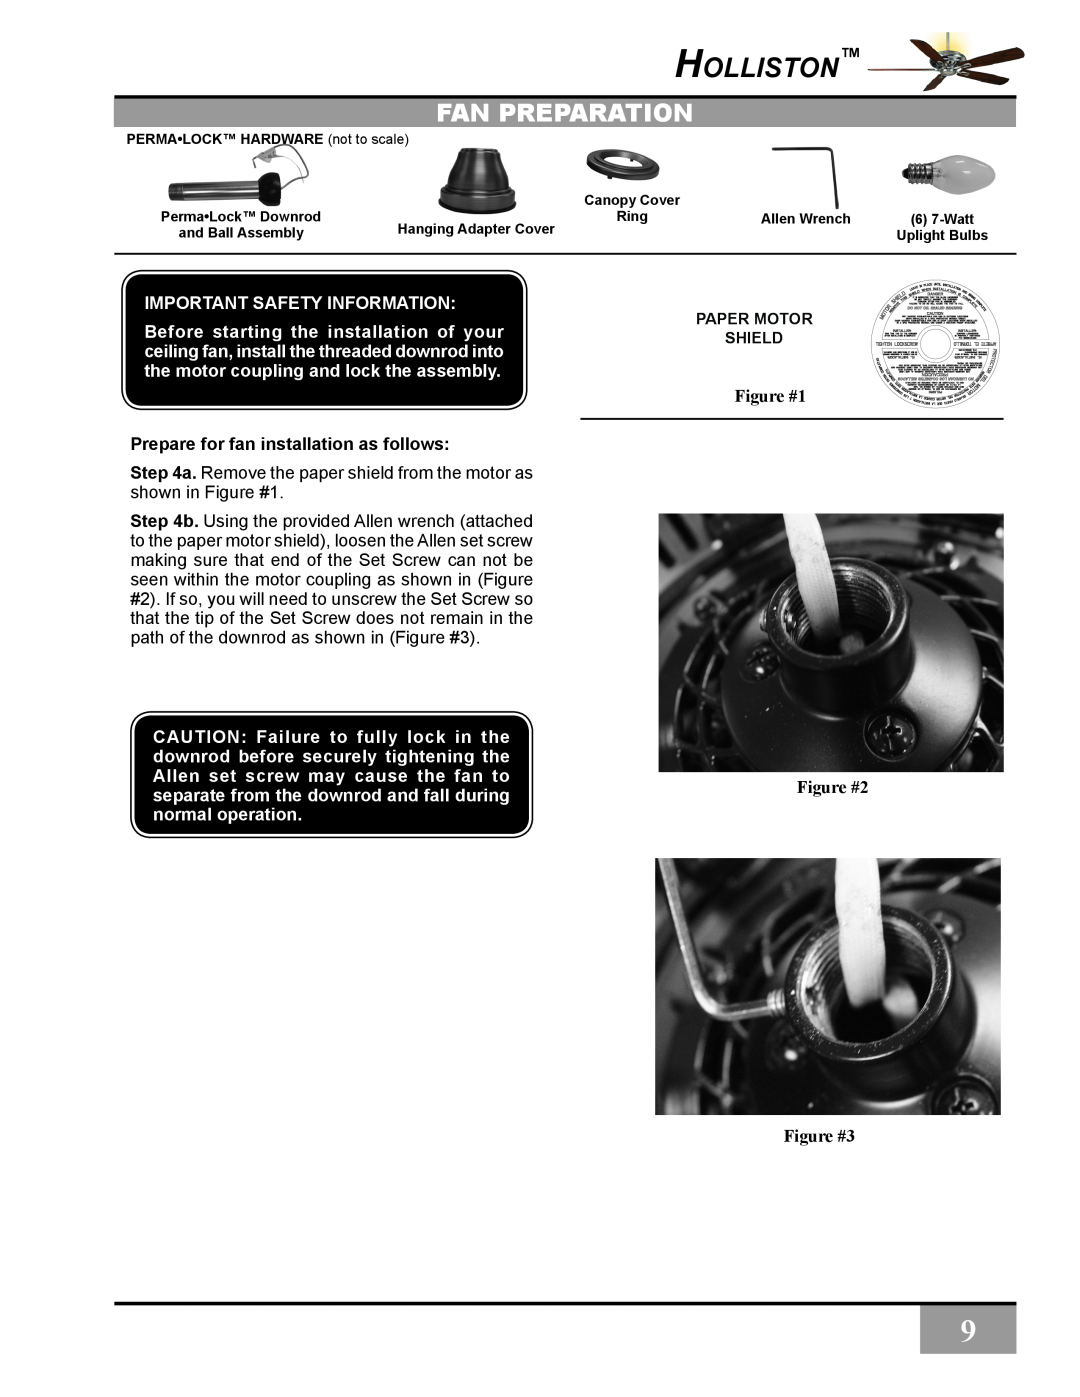 Casablanca Fan Company C31UxxZ Fan Preparation, Important Safety Information, Prepare for fan installation as follows 